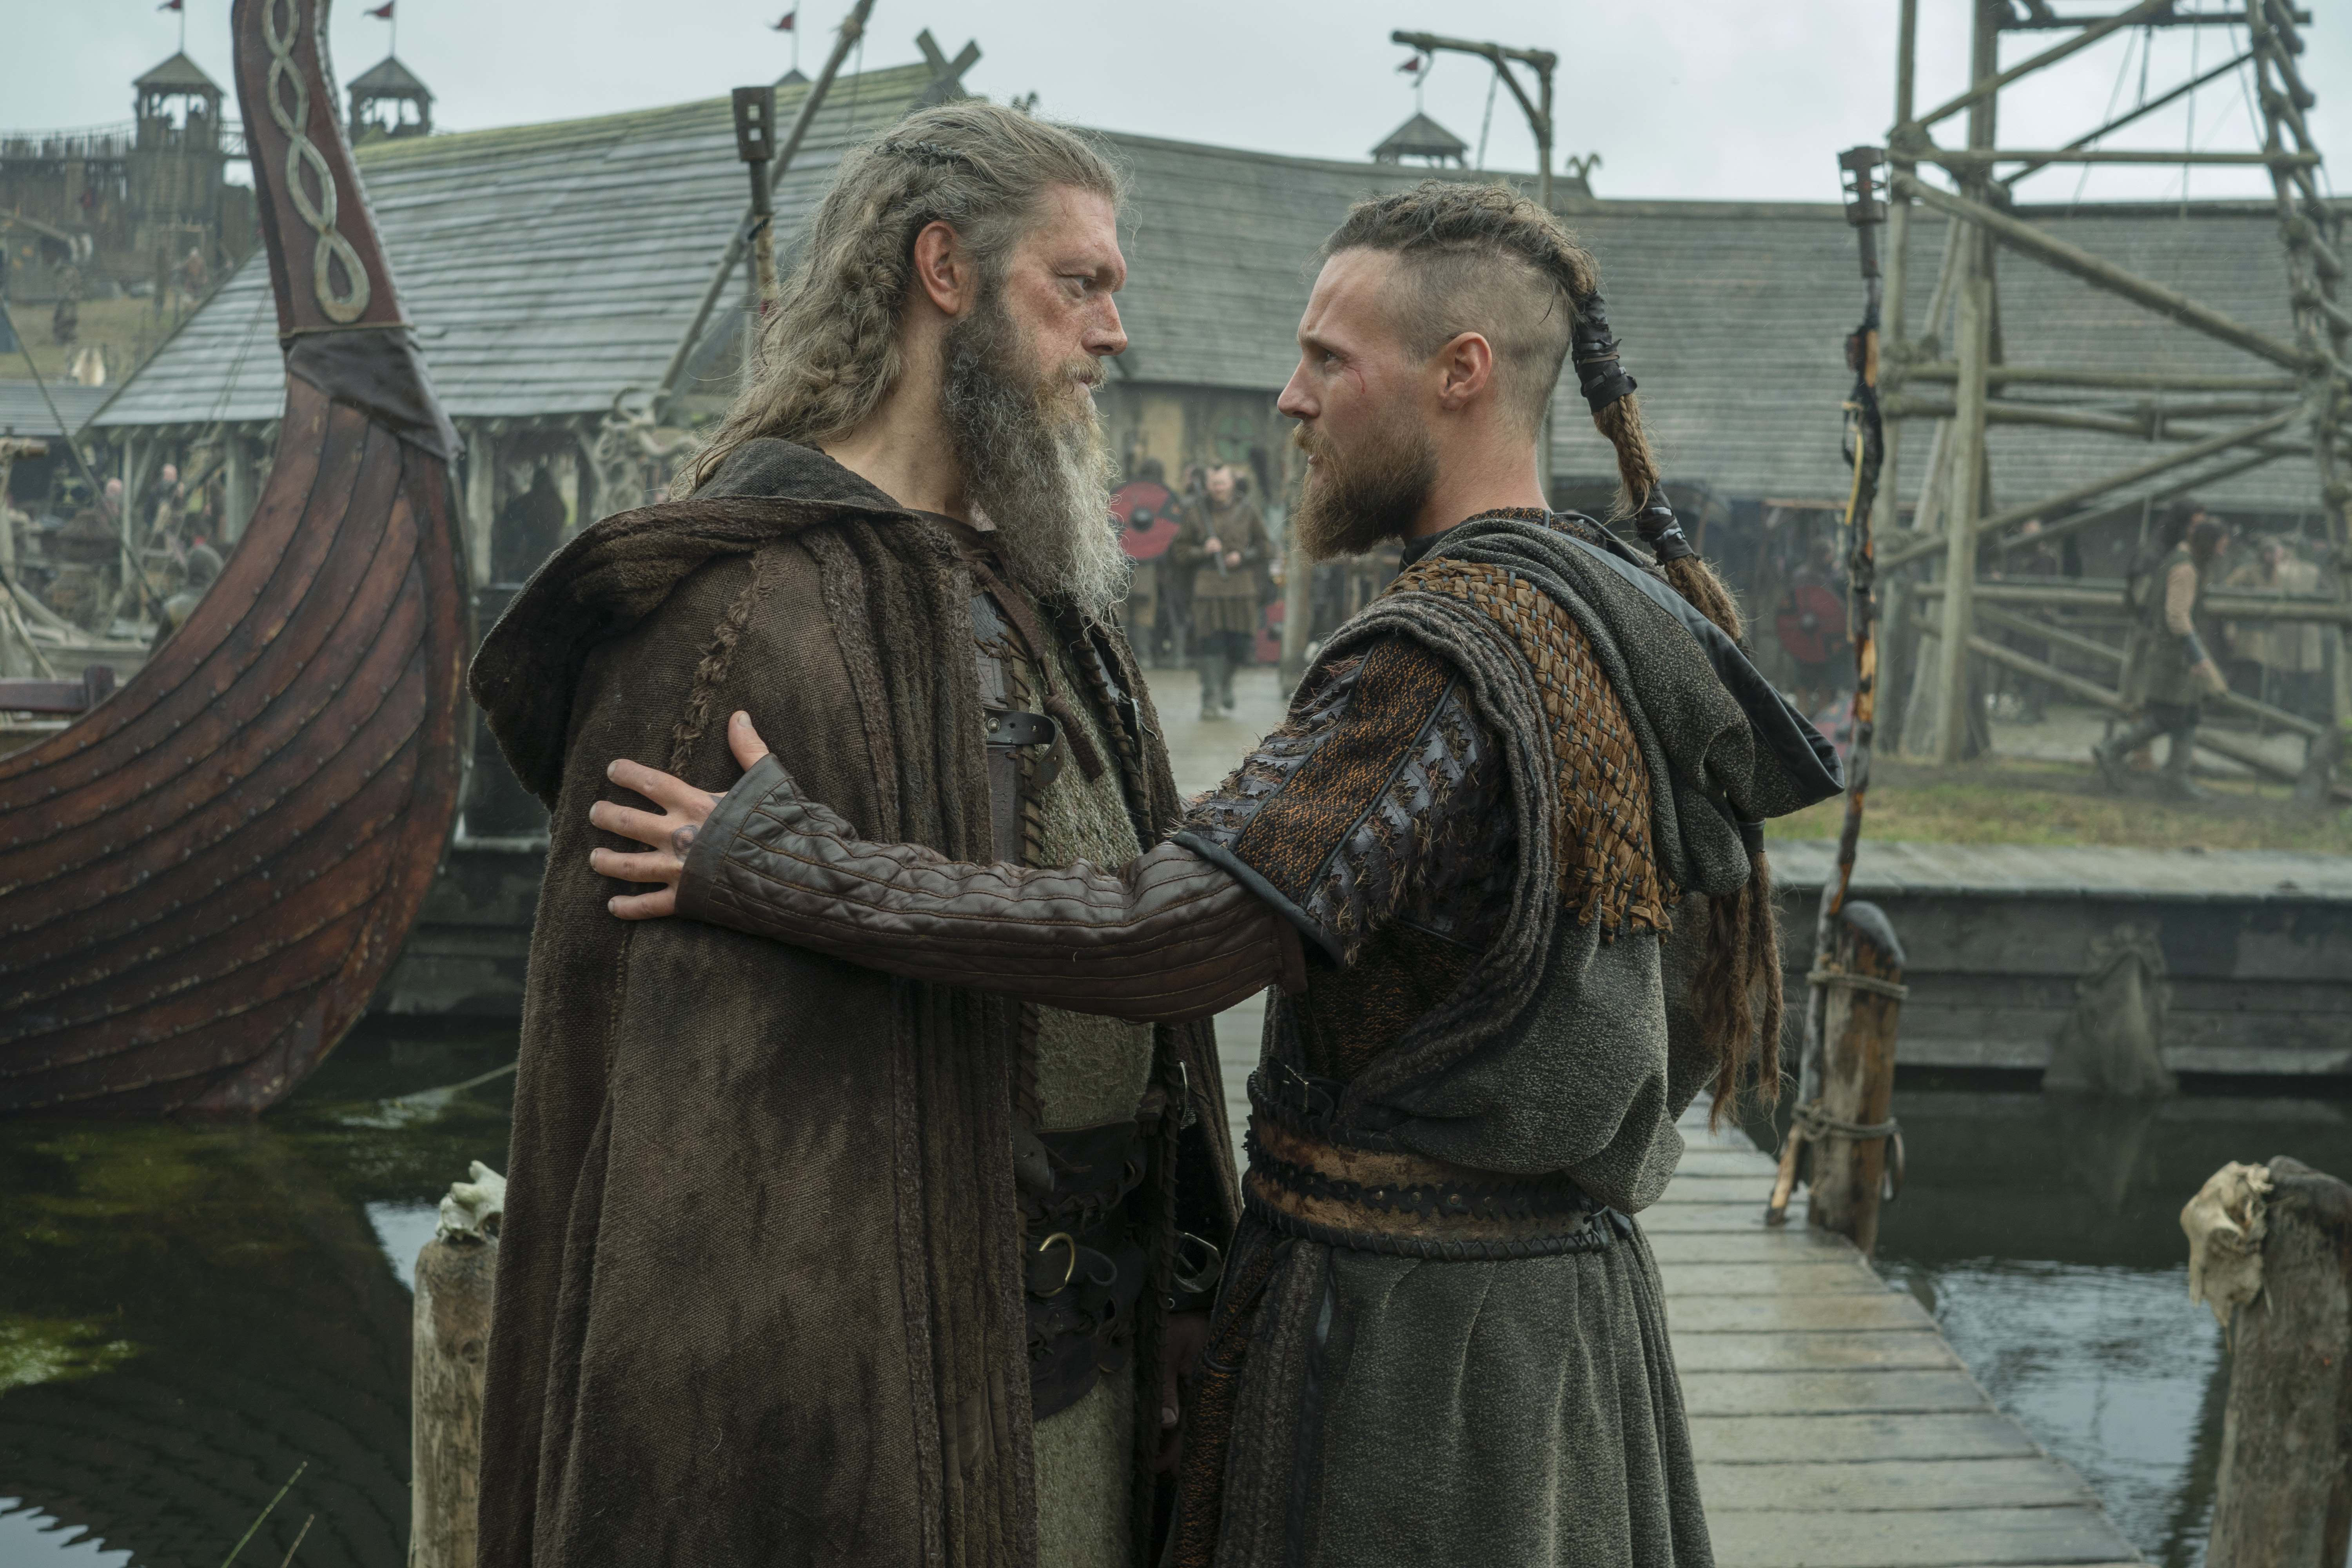 Vikings (season 6) - Wikipedia